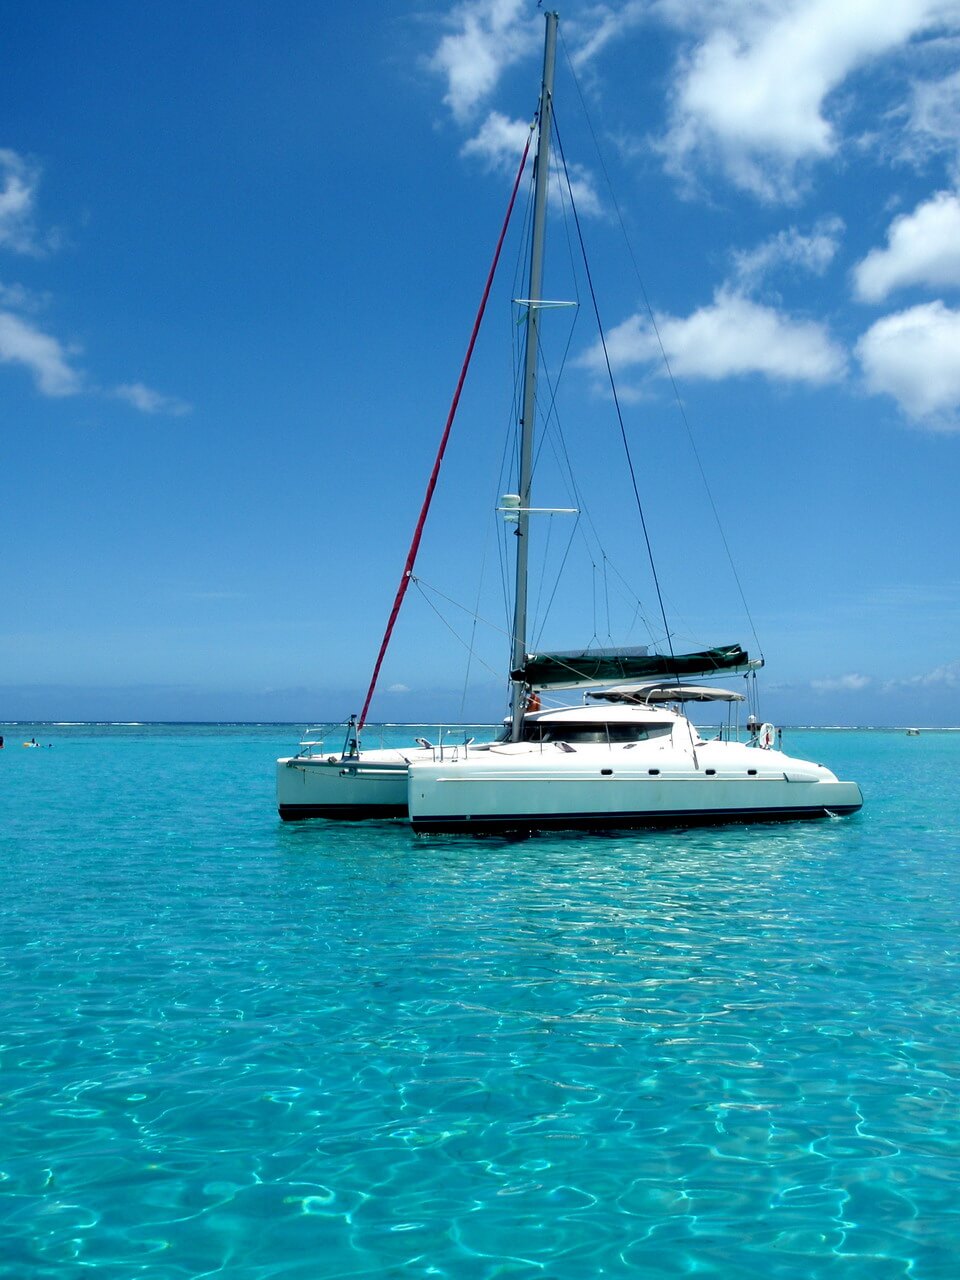 http://tahitivoileetlagon.com/wp-content/uploads/2014/10/tahiti-voile-lagon-croisiere-bateau-catamaran-monocoque-polynesie-77.jpg